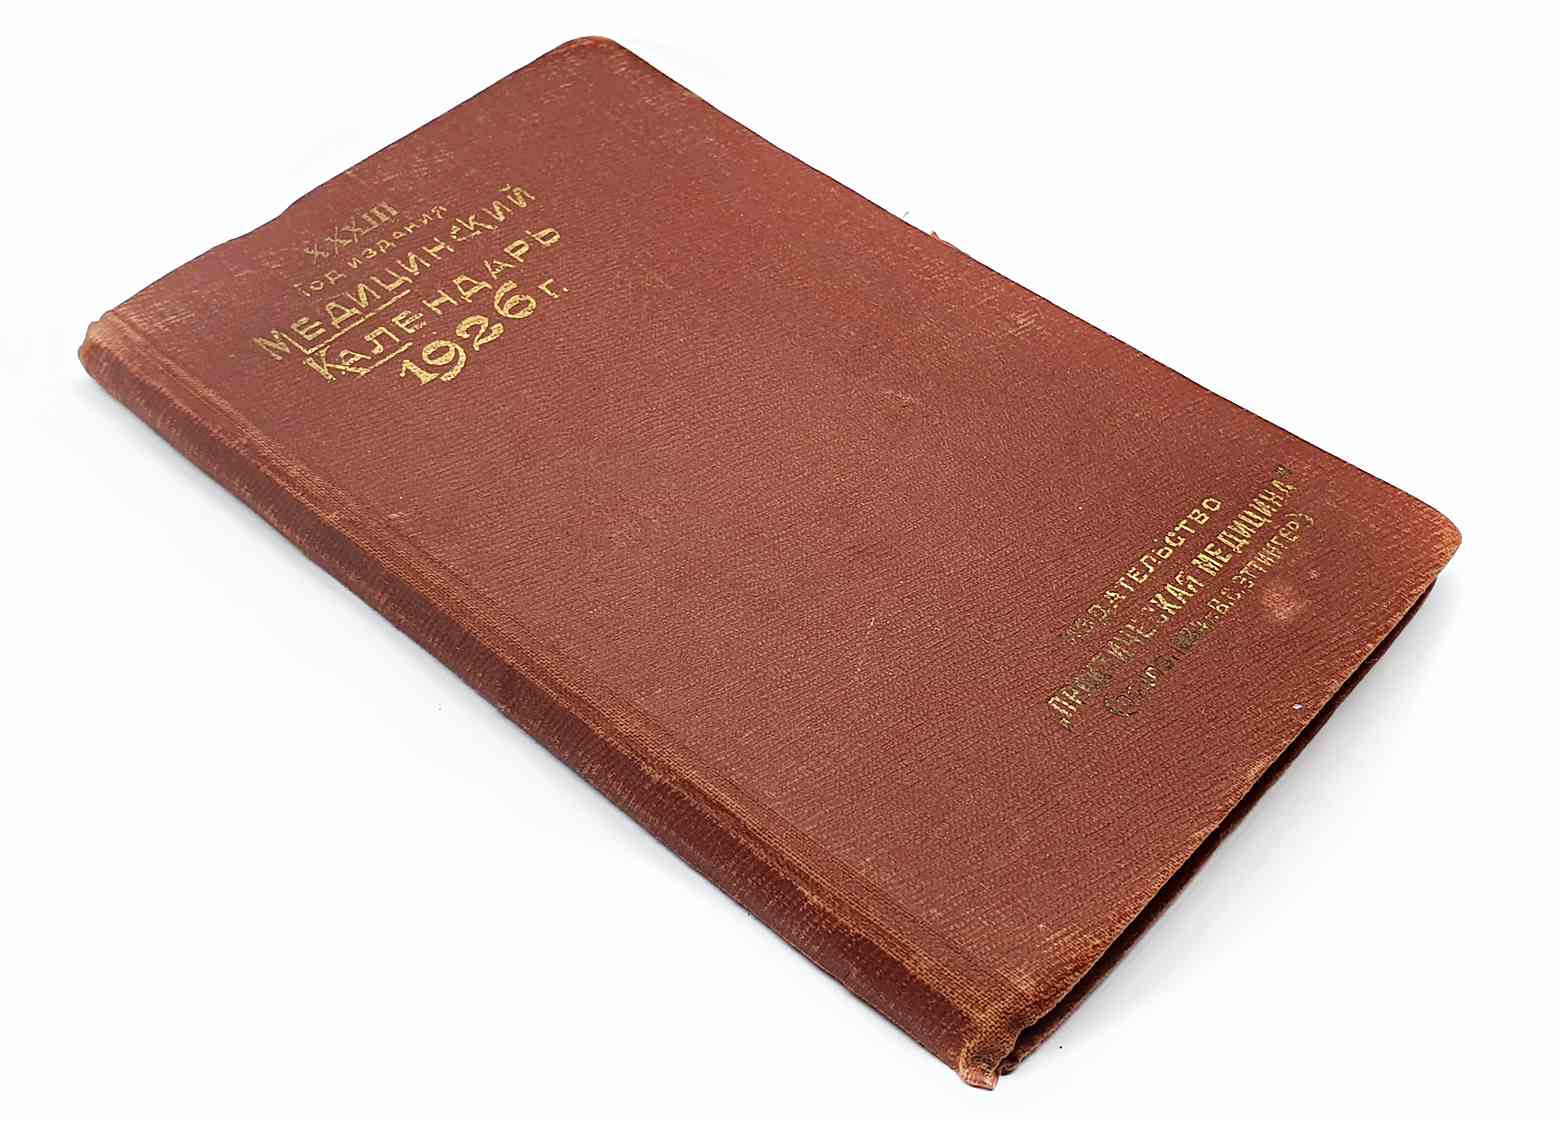 Кодексы 1922 1926. УК 1926 года. Уголовный кодекс 1926. Библиотека практического врача 1926 год. Ключи 1926 год.